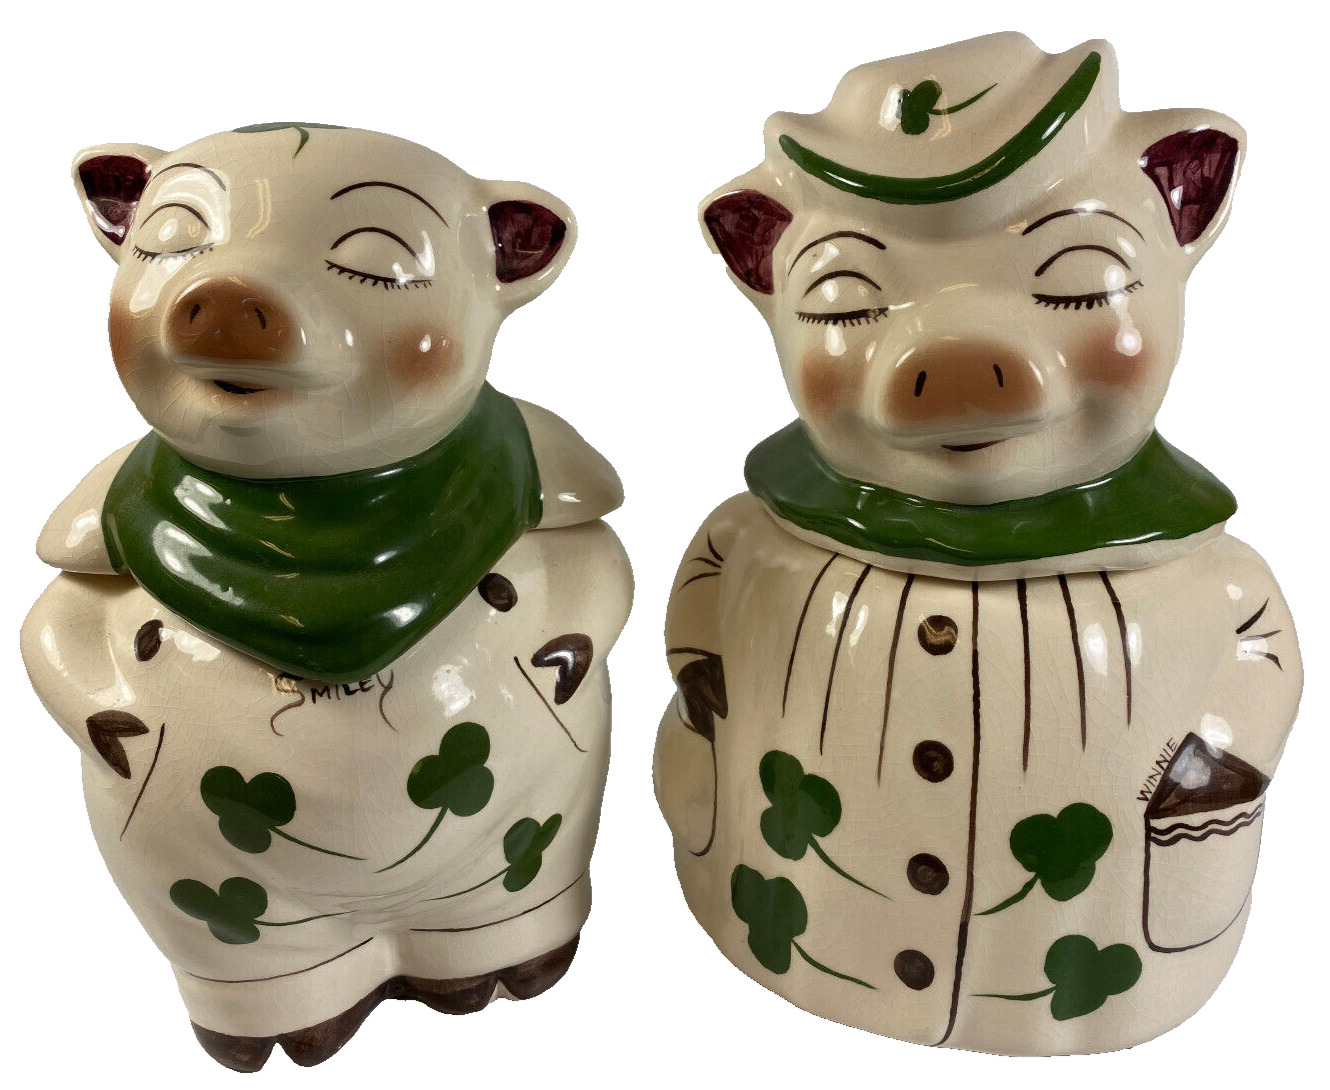 WINNIE & SMILEY PIG MATCHING COOKIE JAR SET - CLOVER LEAF PATTERN - SIGNED USA